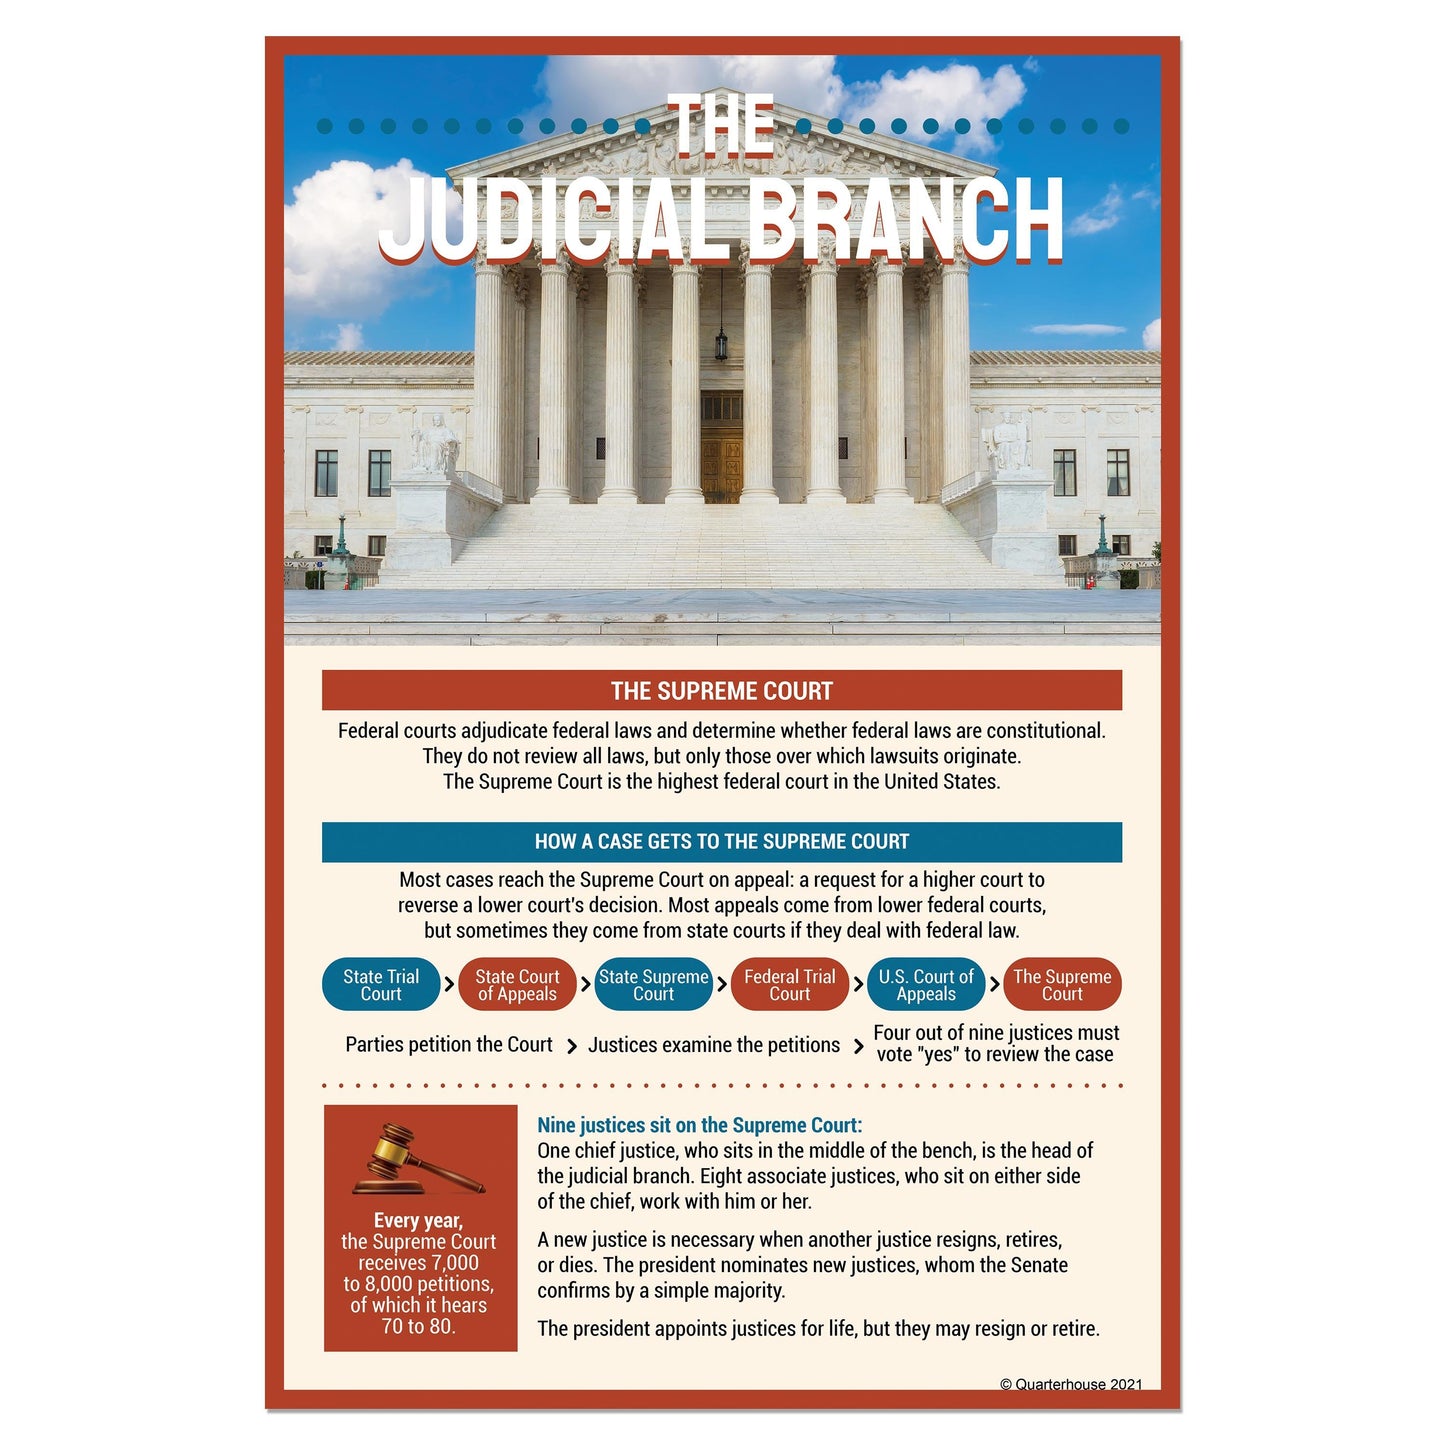 Quarterhouse Judicial Branch (Supreme Court) Poster, Social Studies Classroom Materials for Teachers